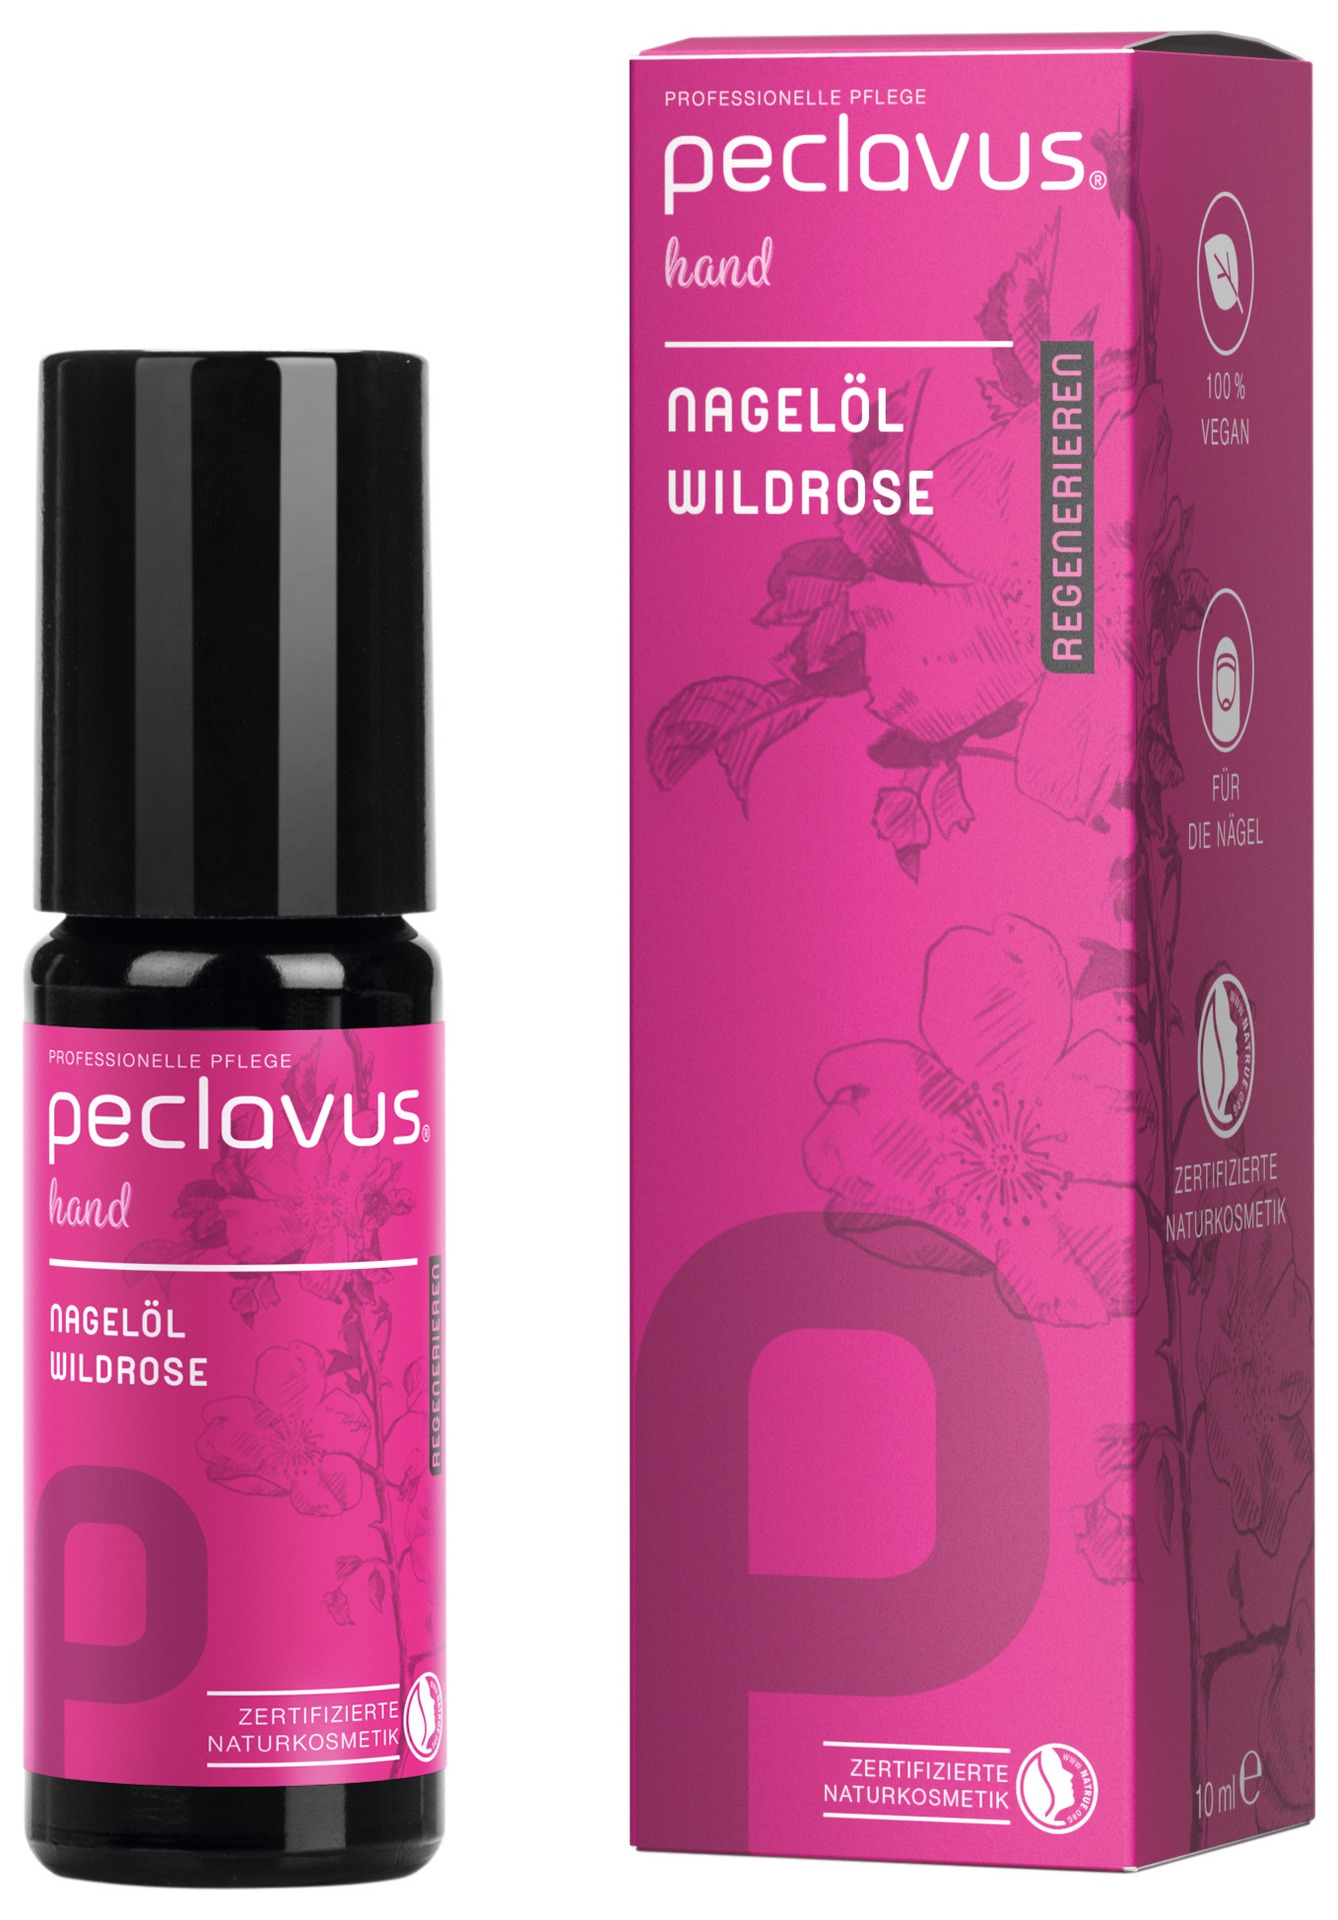 PECLAVUS Nagelöl Wildrose 10 ml | Regenerieren